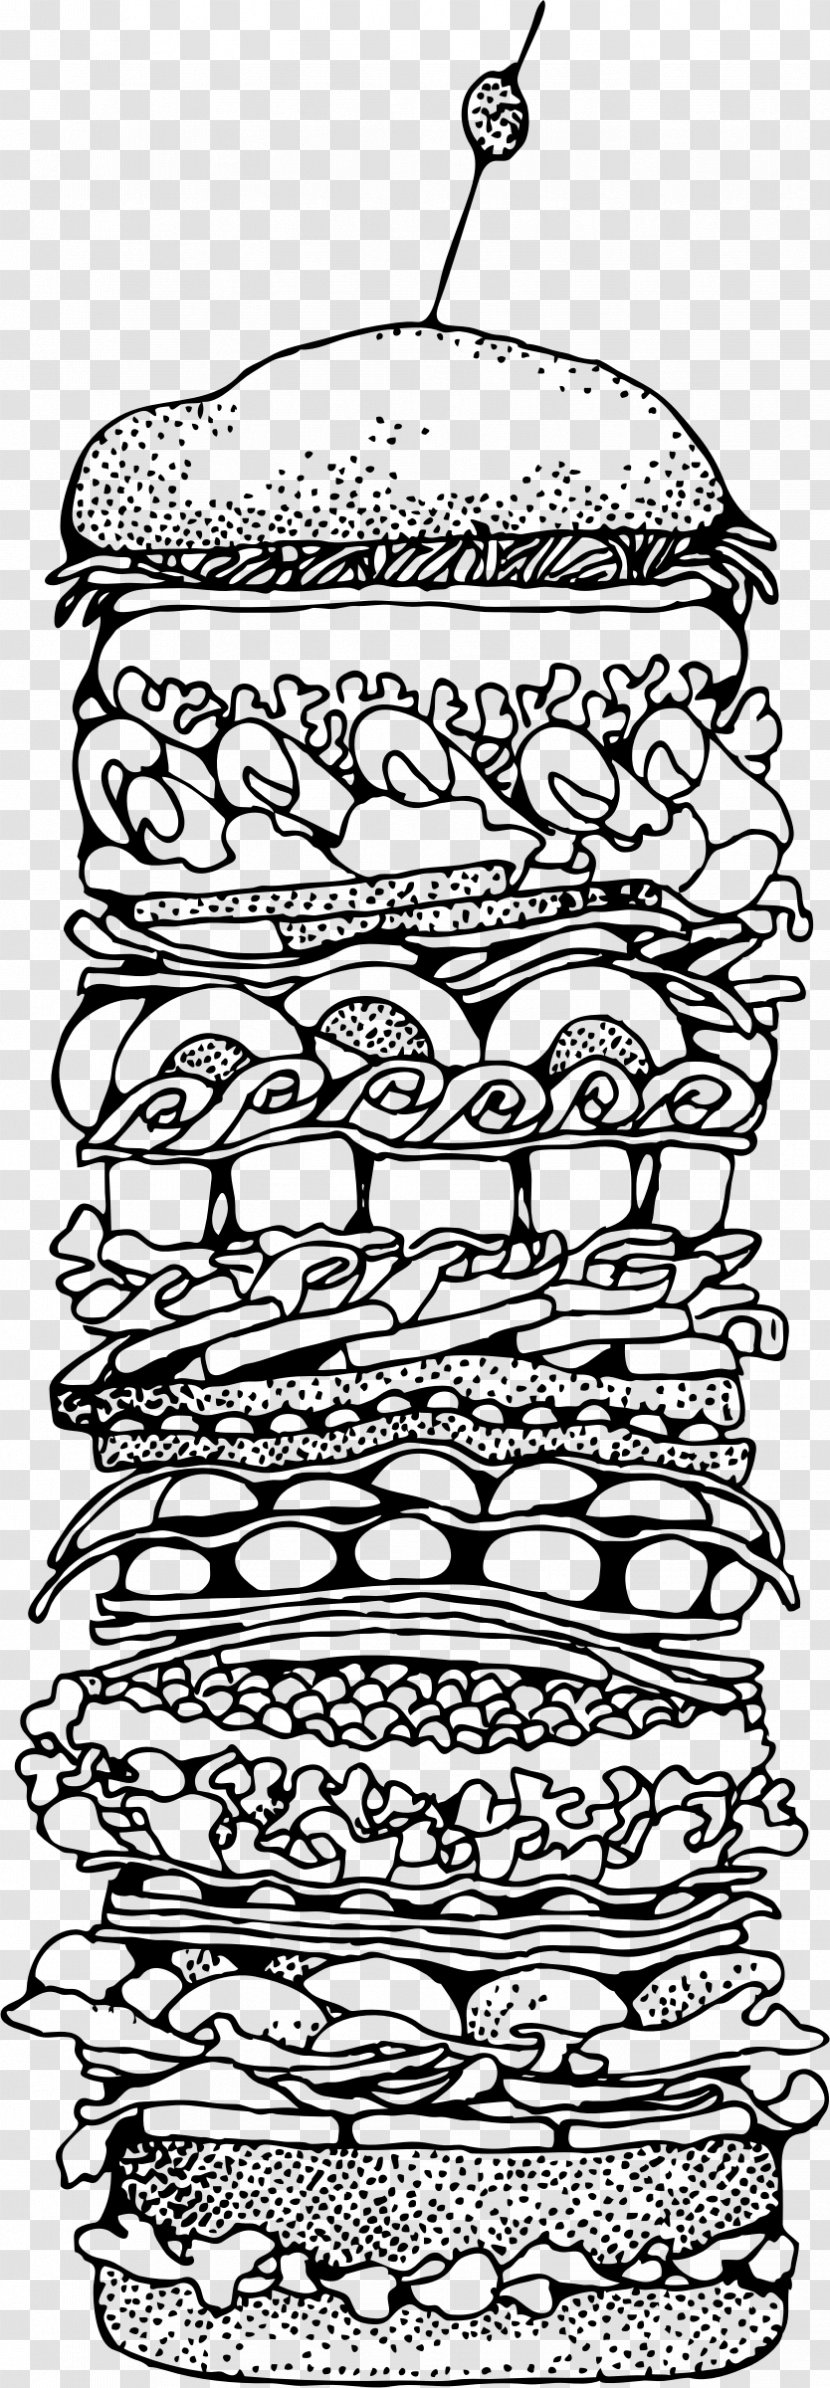 Peanut Butter And Jelly Sandwich Submarine Hamburger Fast Food Tuna Salad - Organism - Line Art Transparent PNG